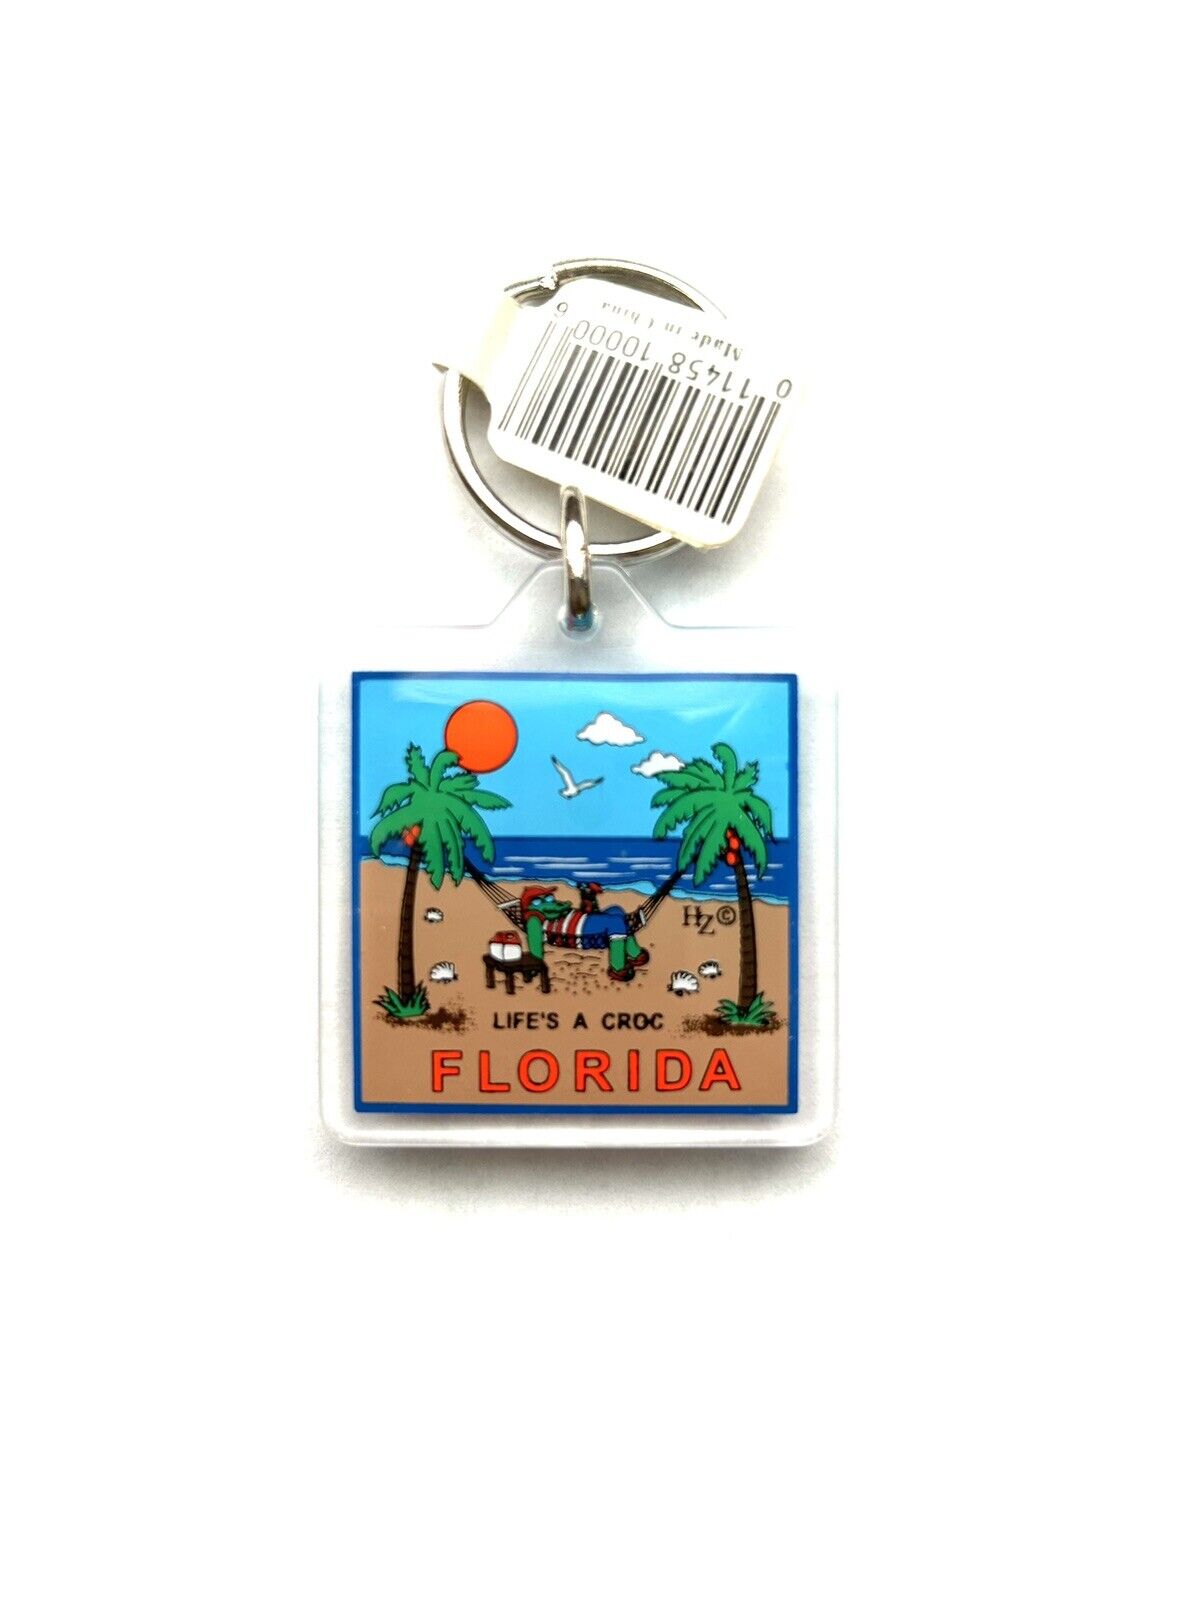 Florida keychain Vintage 1993 Souvenir